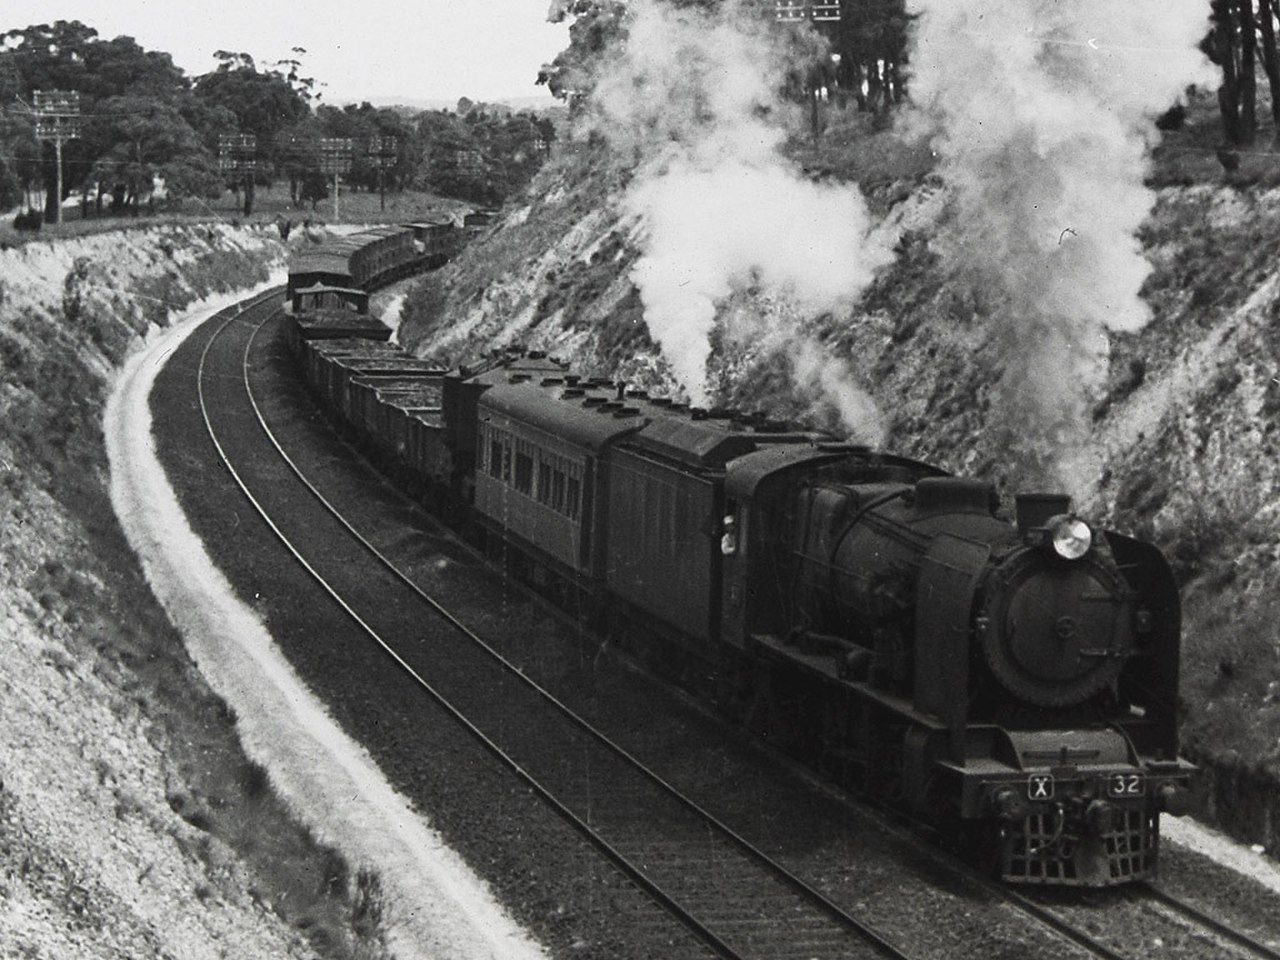 Coal and steam фото 11